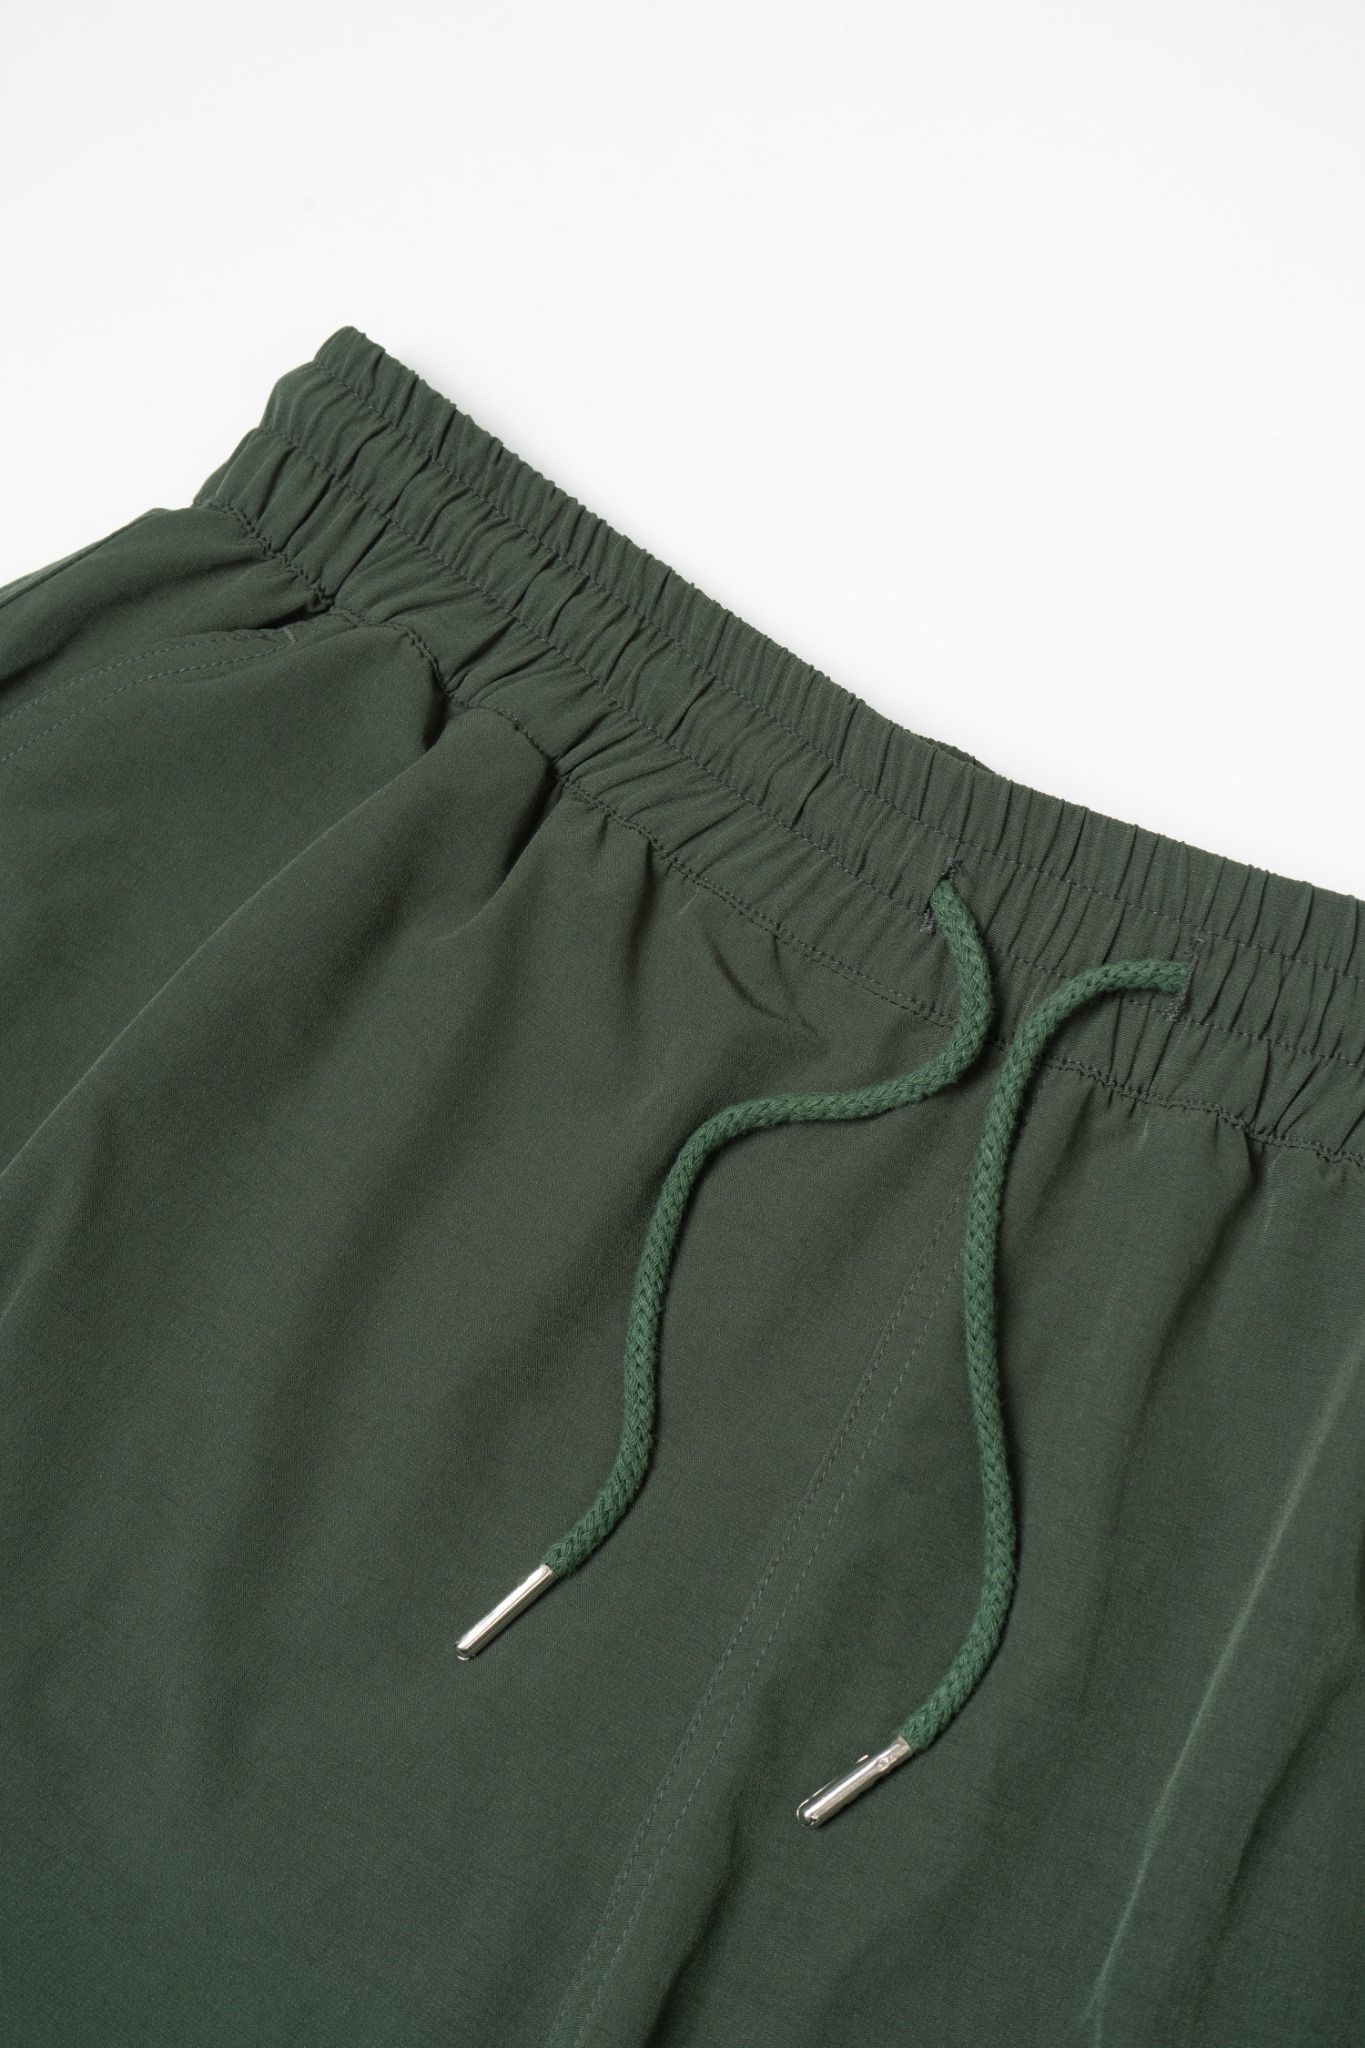 Berghaus wind pants in green - part of a set | ASOS